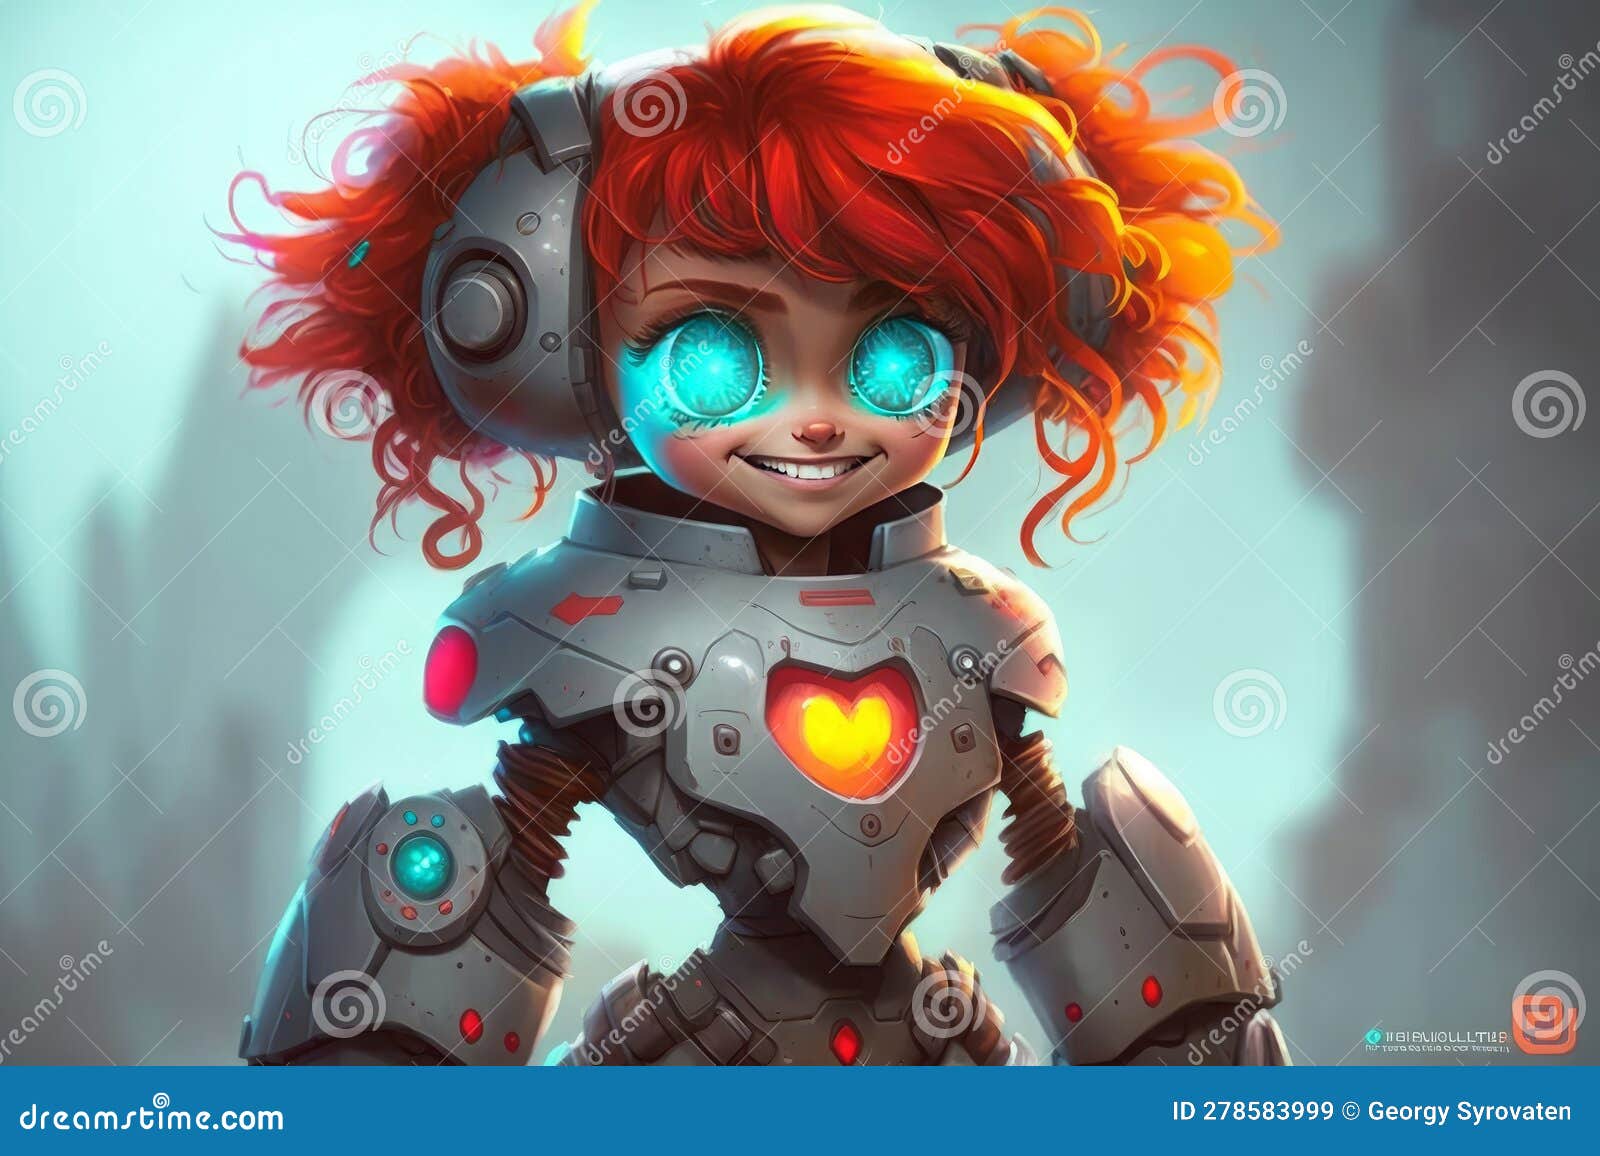 ble technologysuper cyborg with a happy smile: a pixaresque fairytale of advanced tech